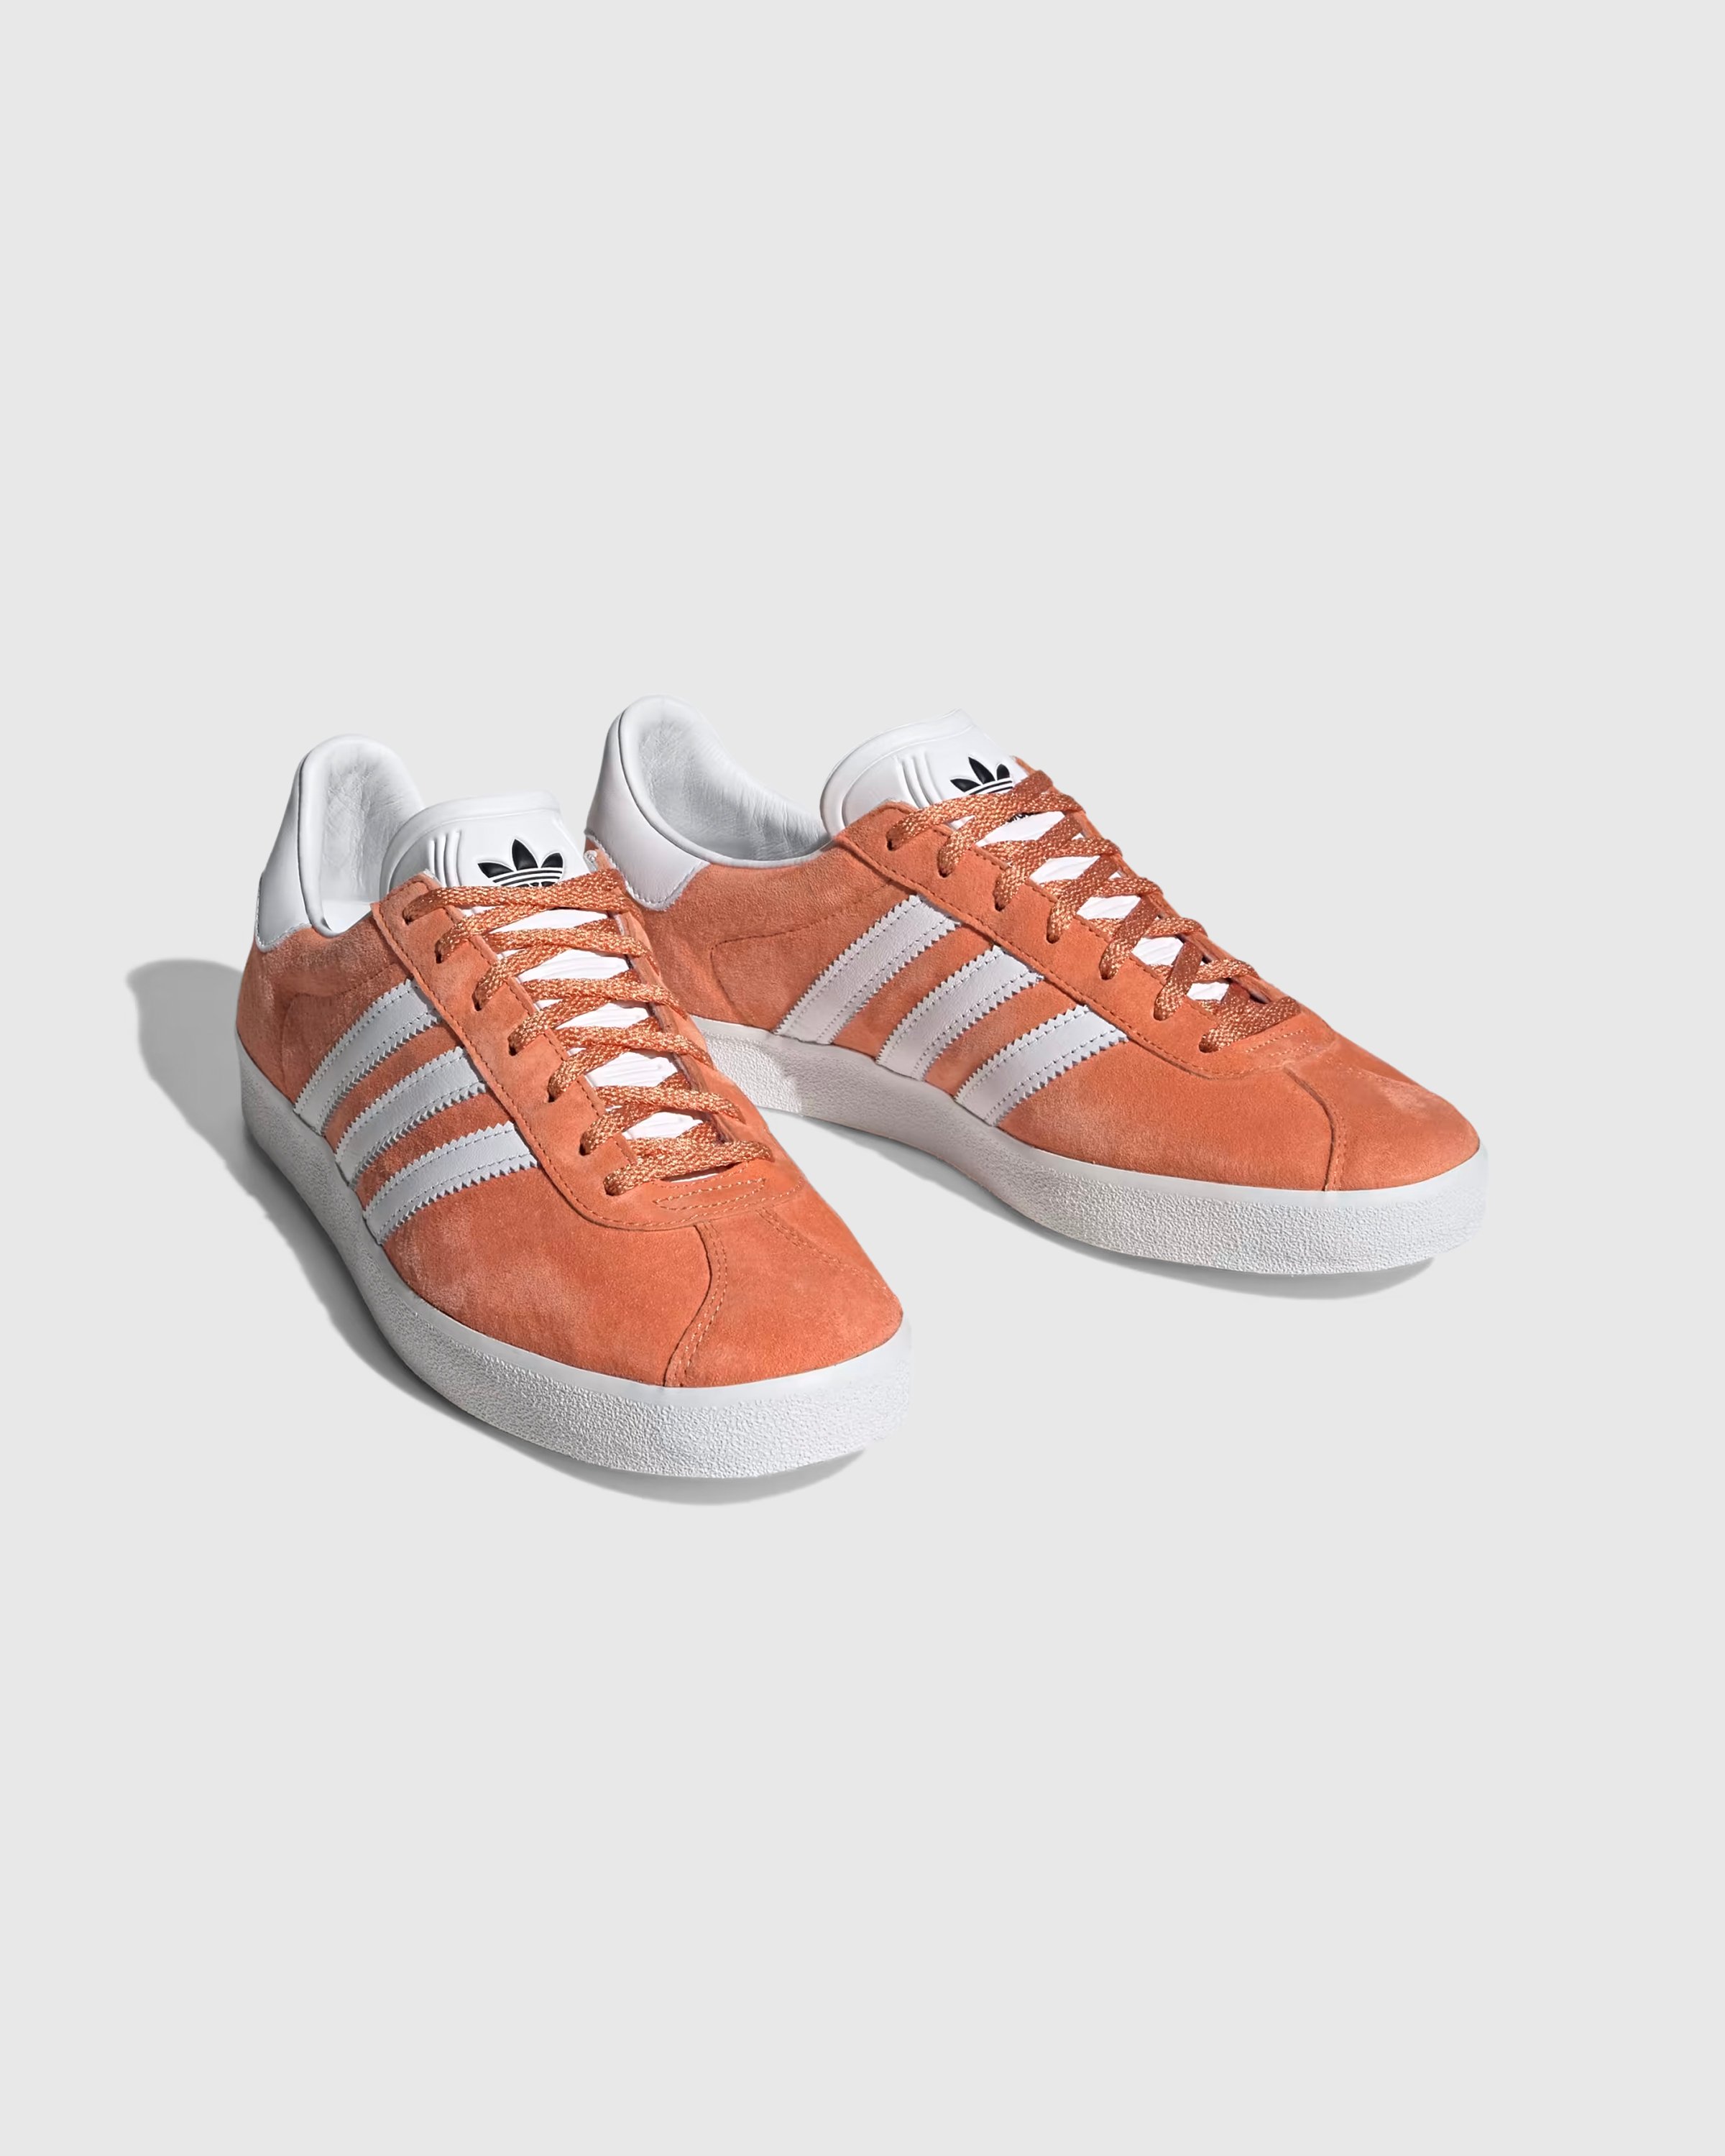 Adidas - Gazelle 85 Orange - Footwear - Orange - Image 3